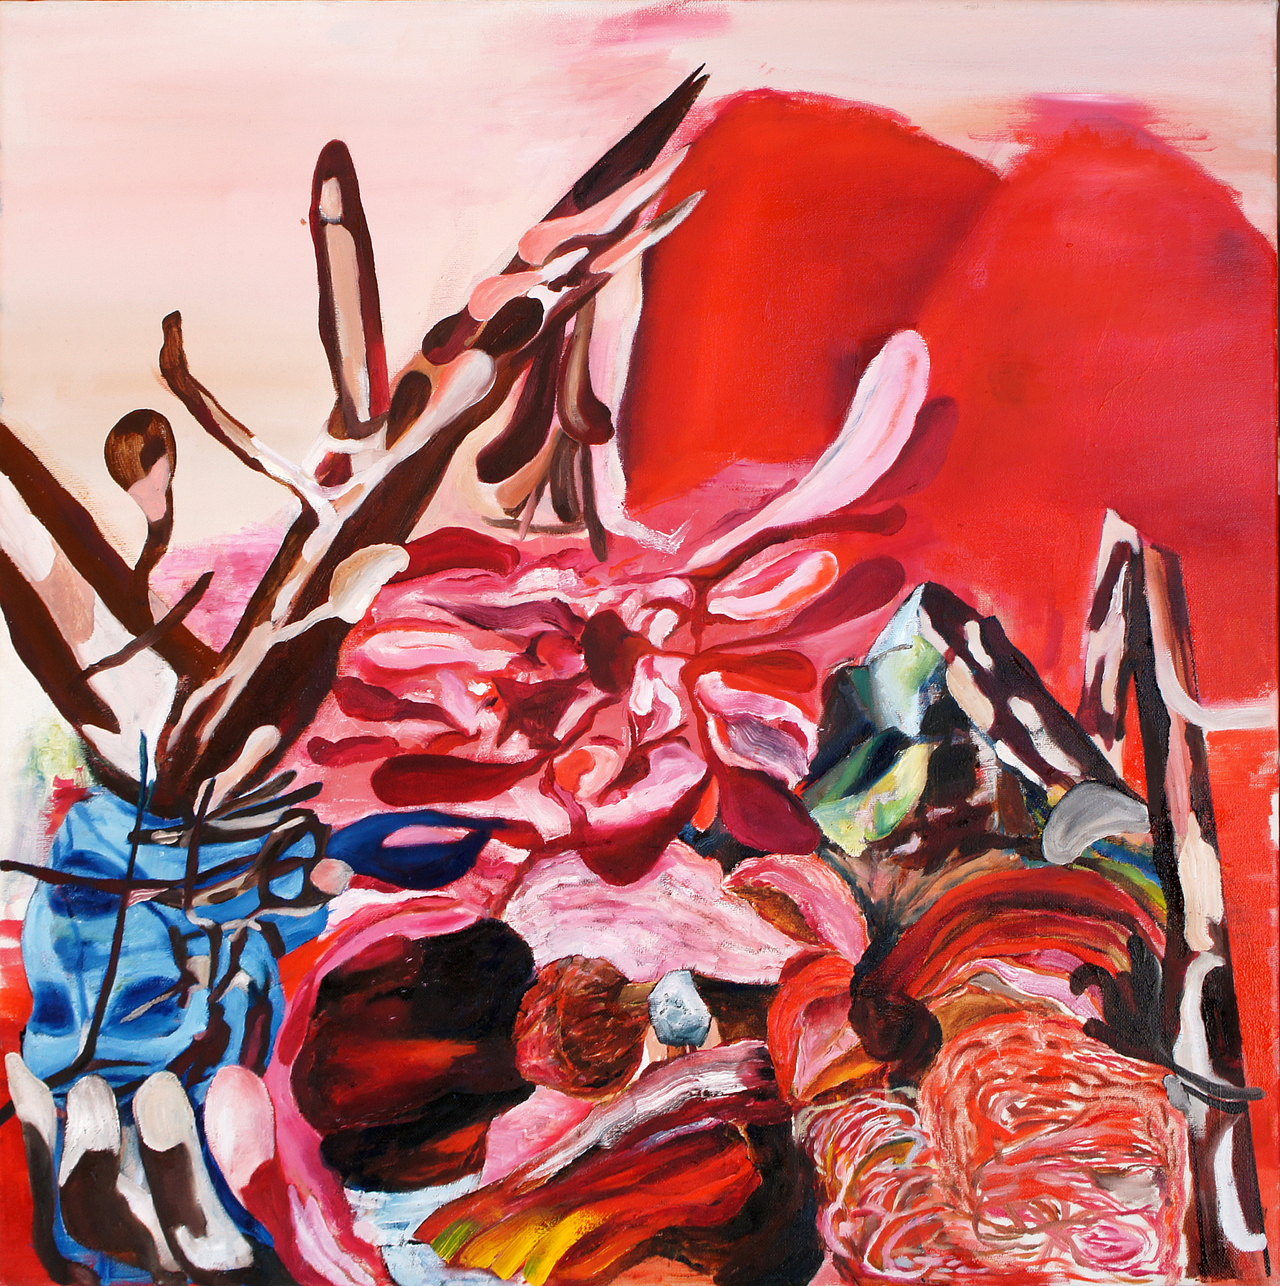 Lacrimosa, oil on canvas, 60 x 60 cm, 2018